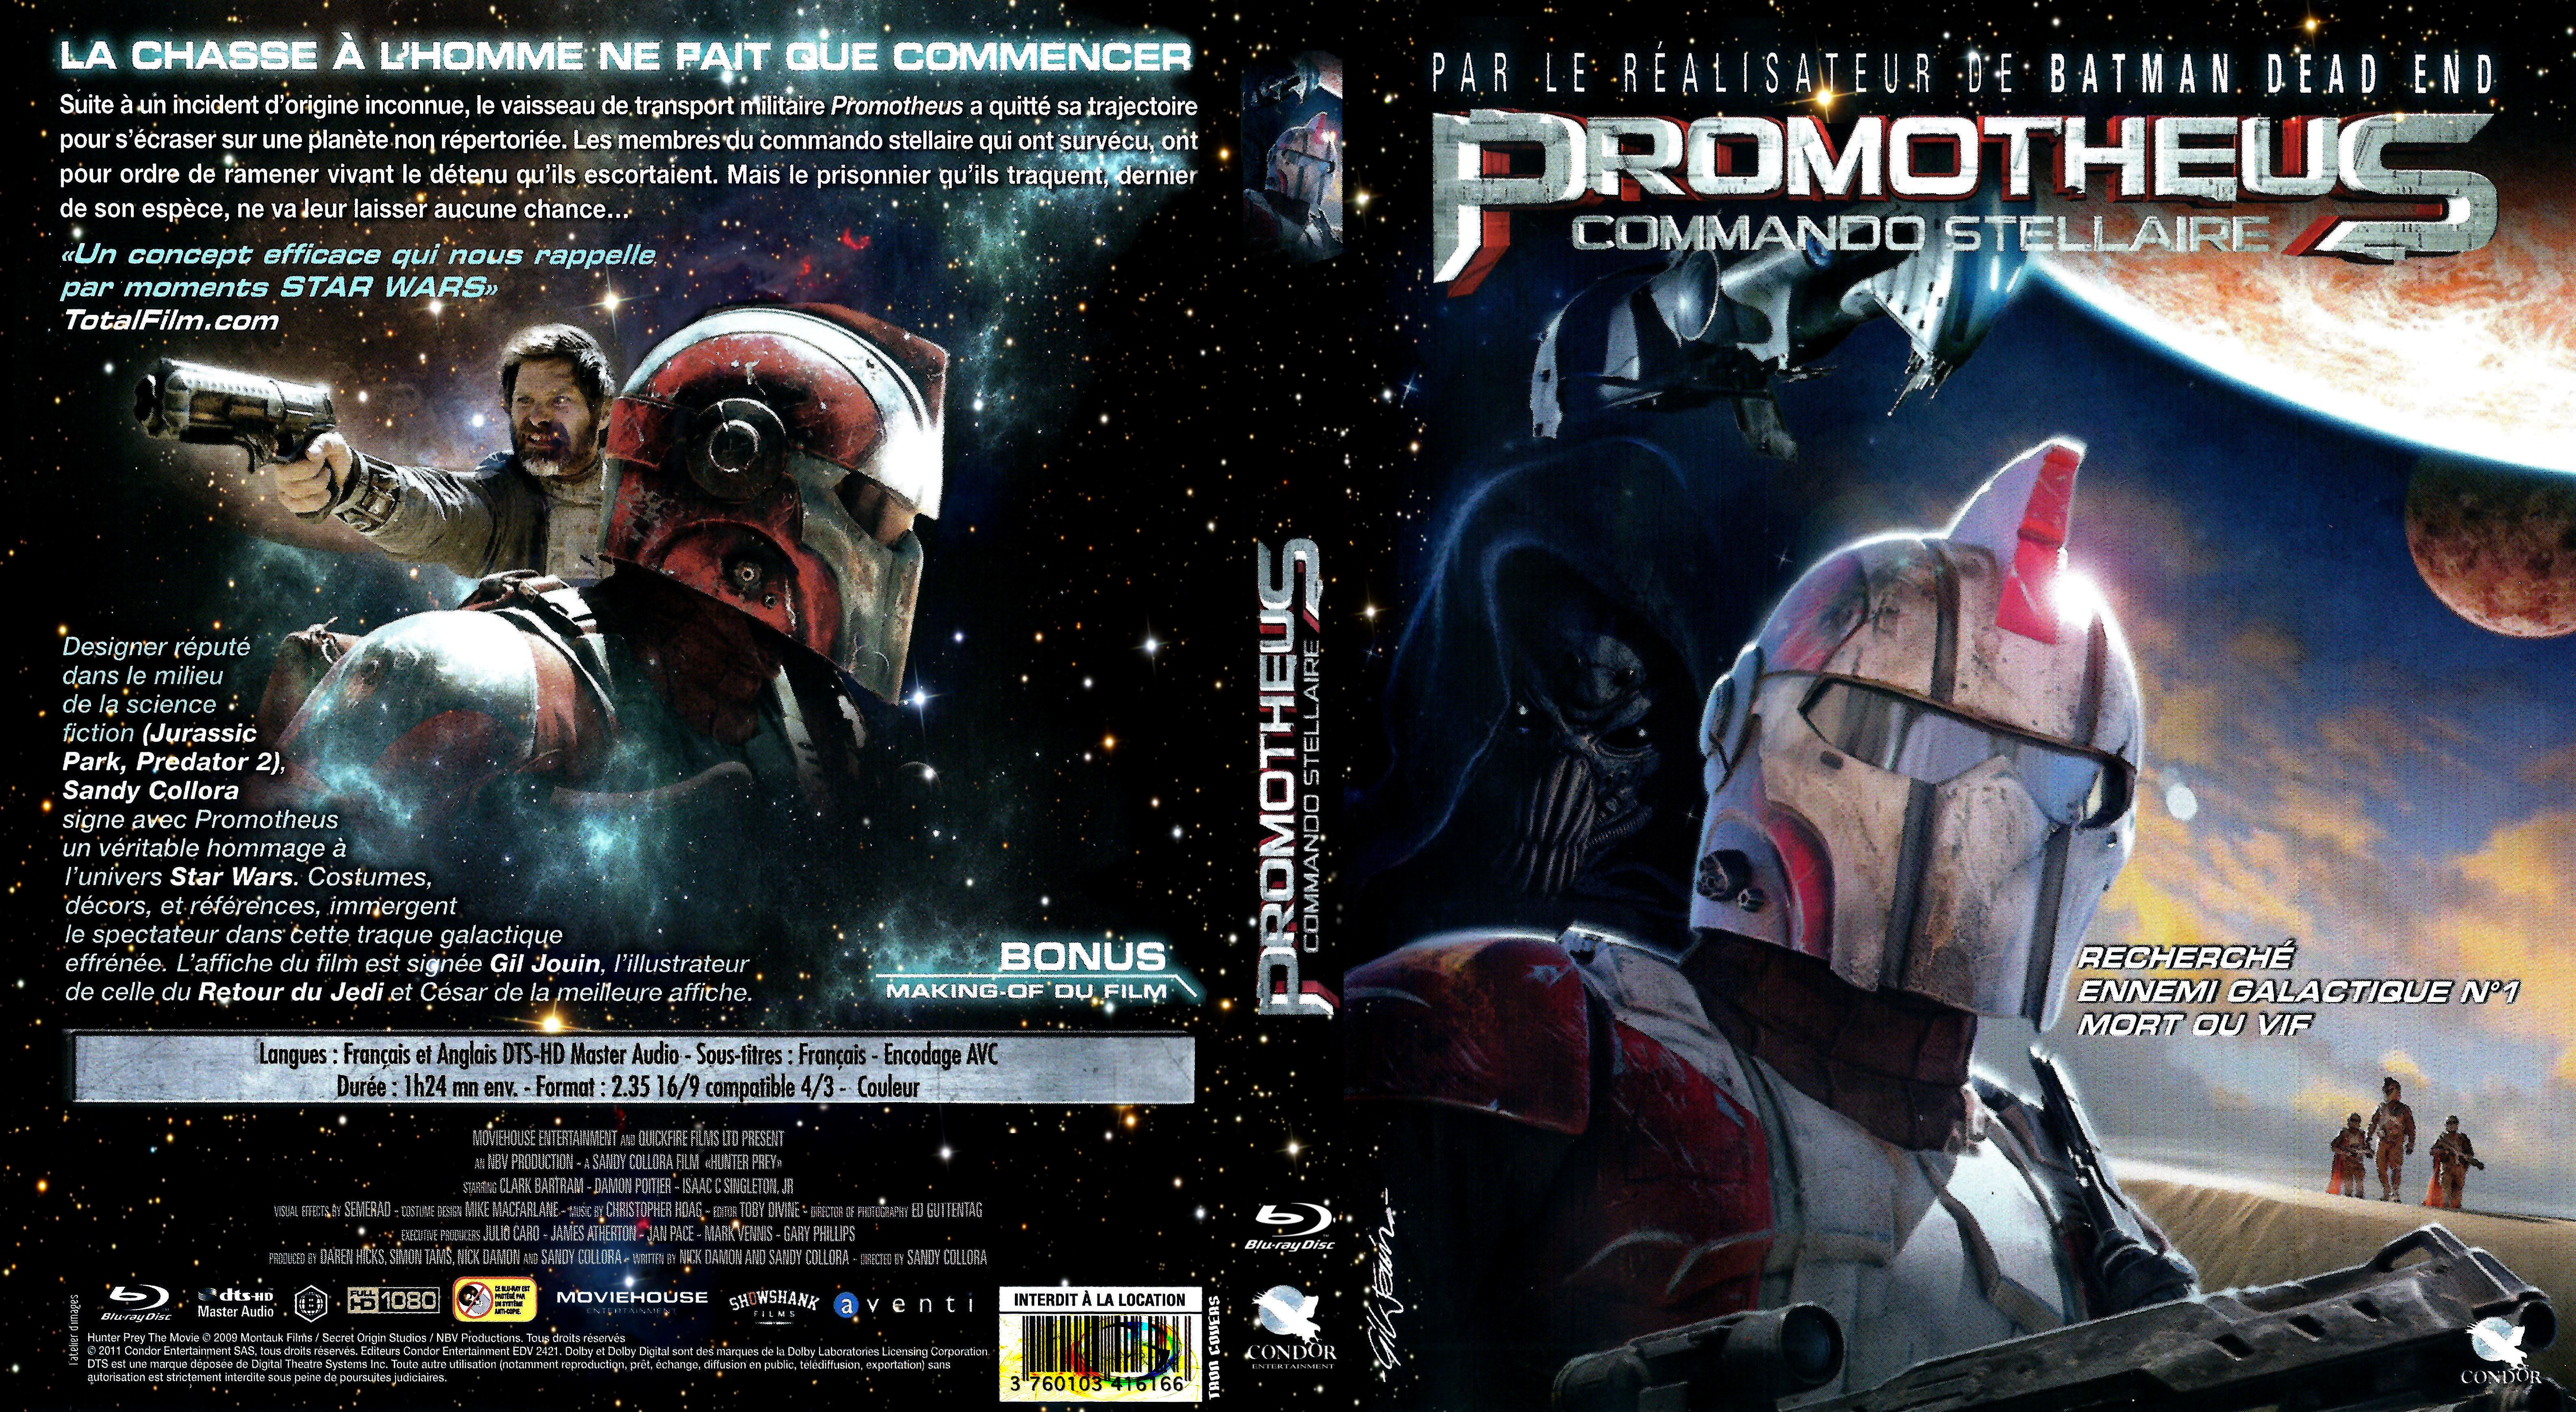 Jaquette DVD Promotheus commando stellaire (BLU-RAY) v2